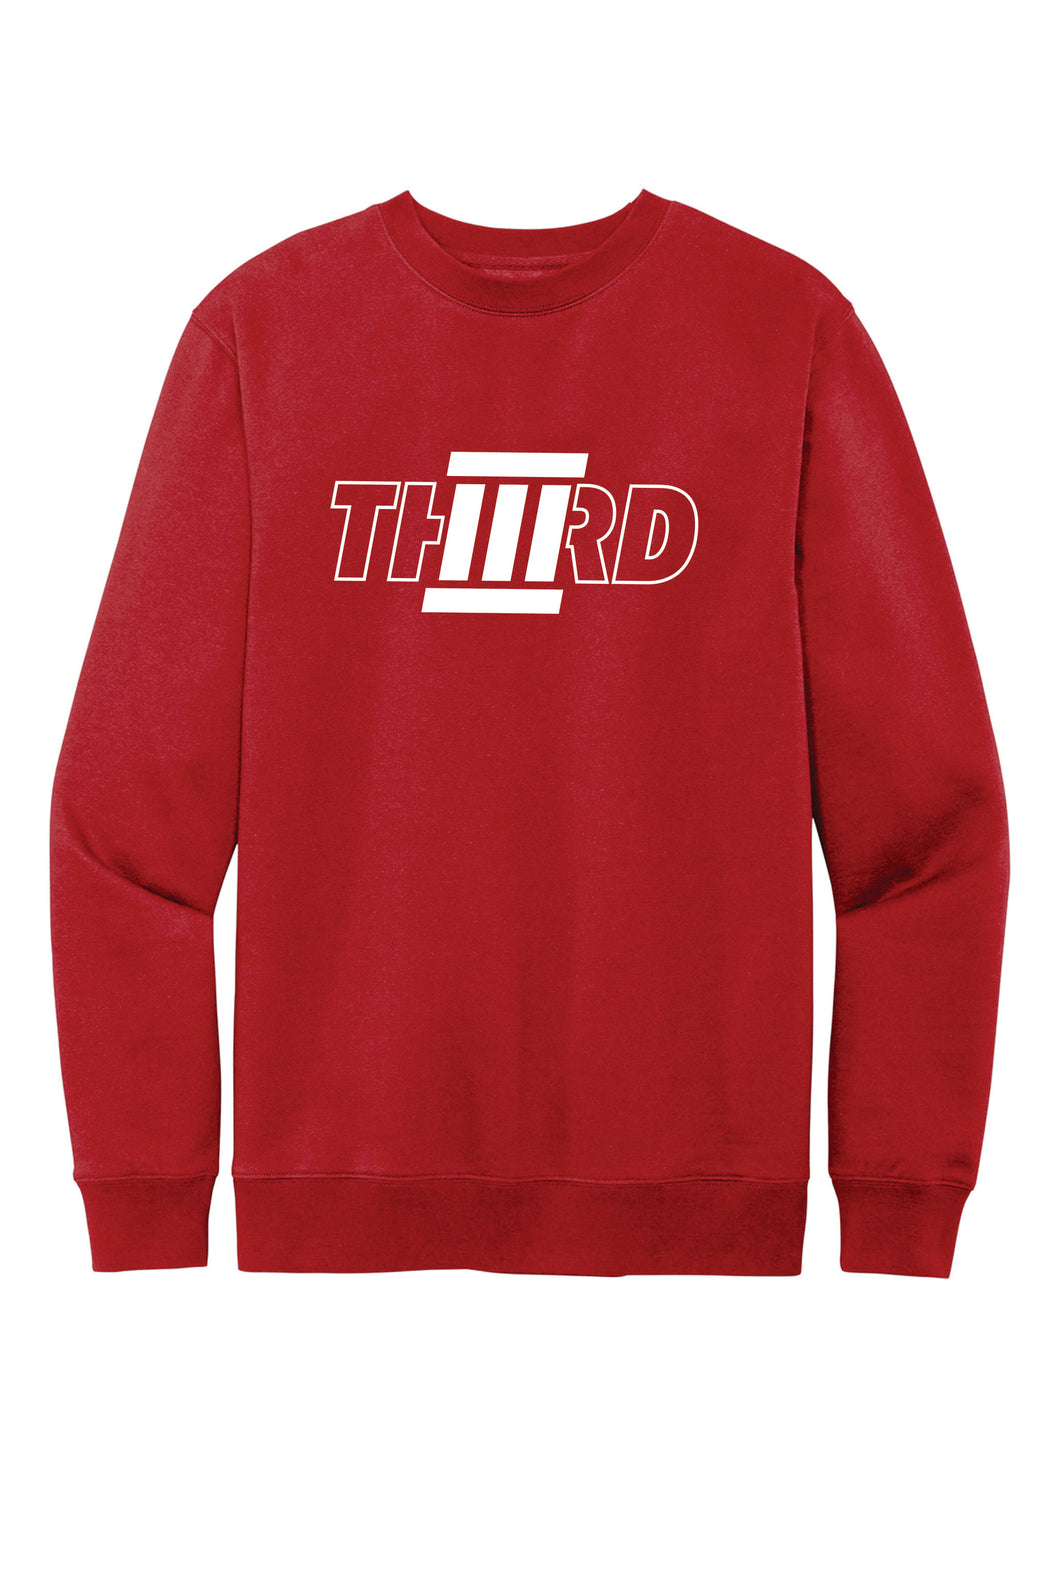 I AM THIRD Red Crewneck Sweatshirt